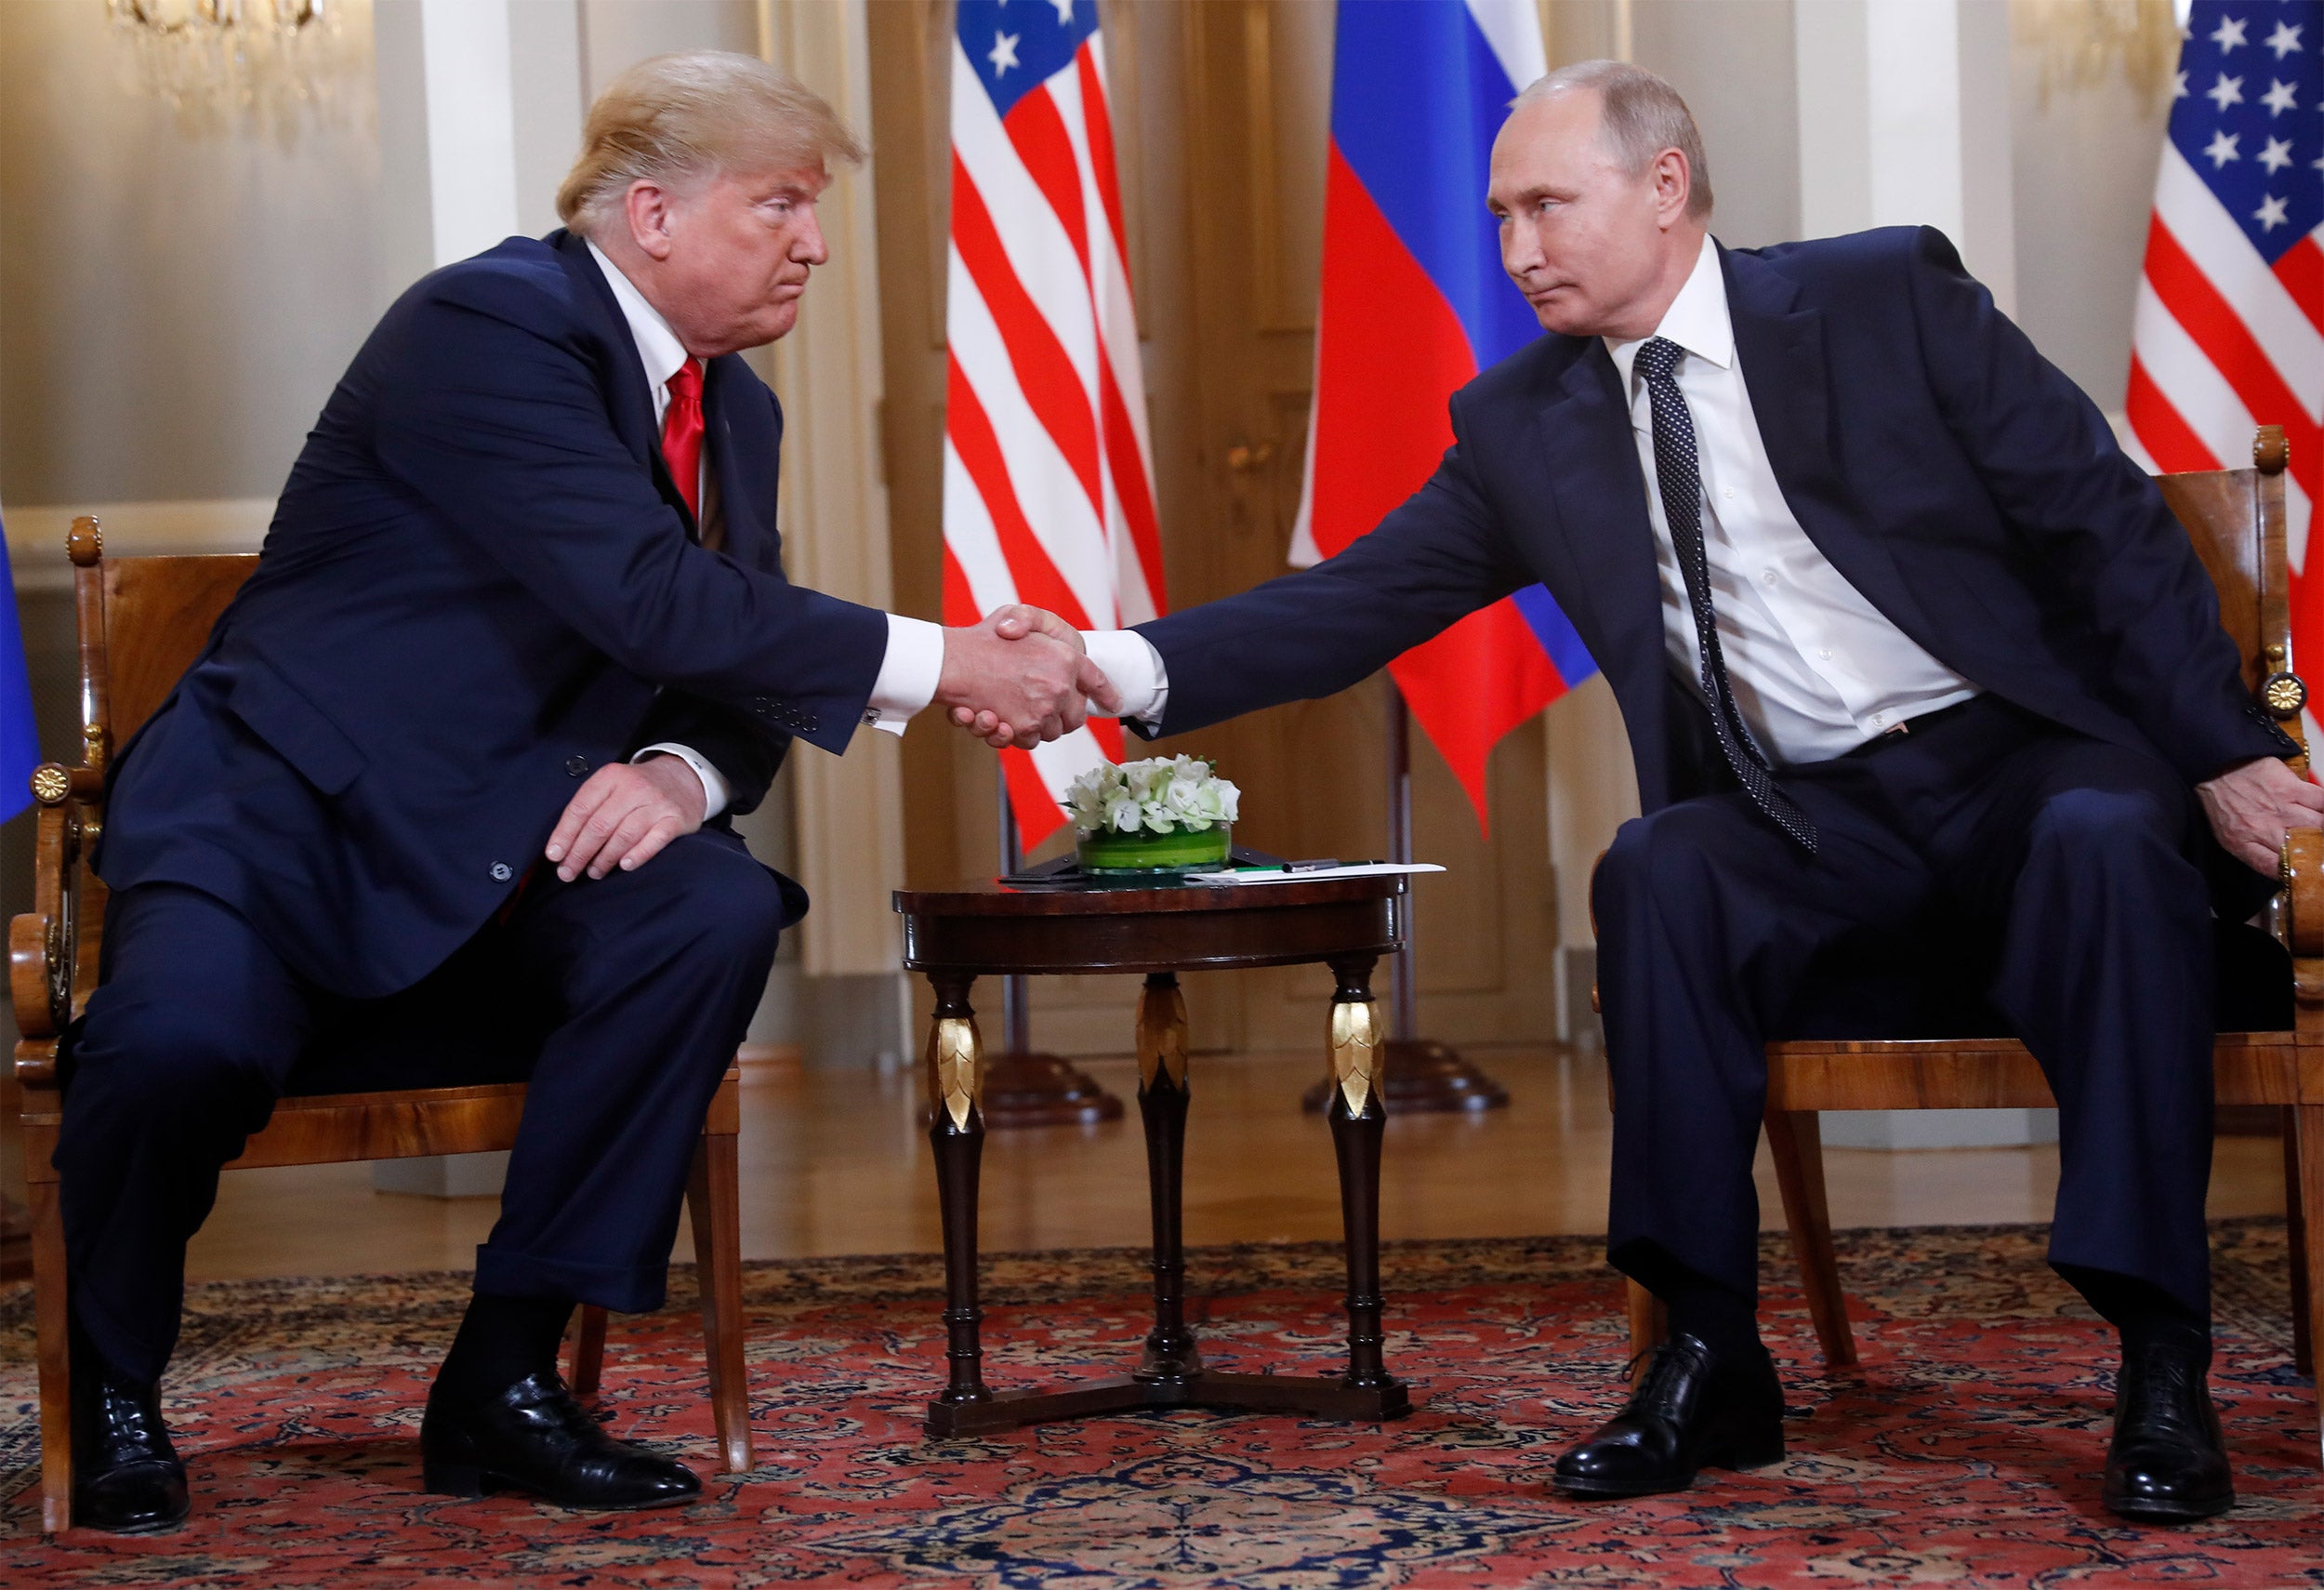 Trump and Putin shaking hands.